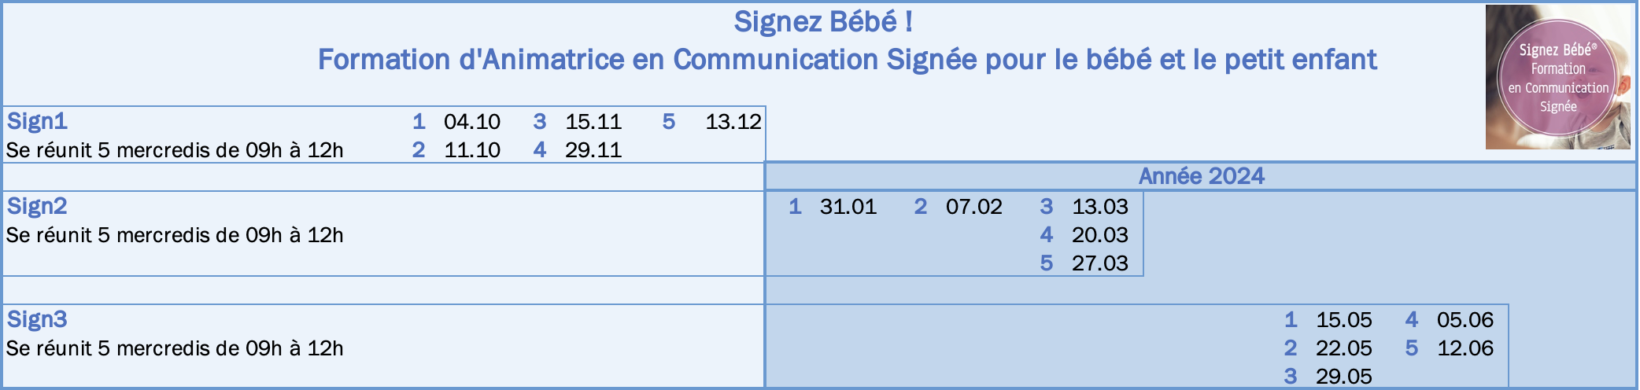 communication signée 24